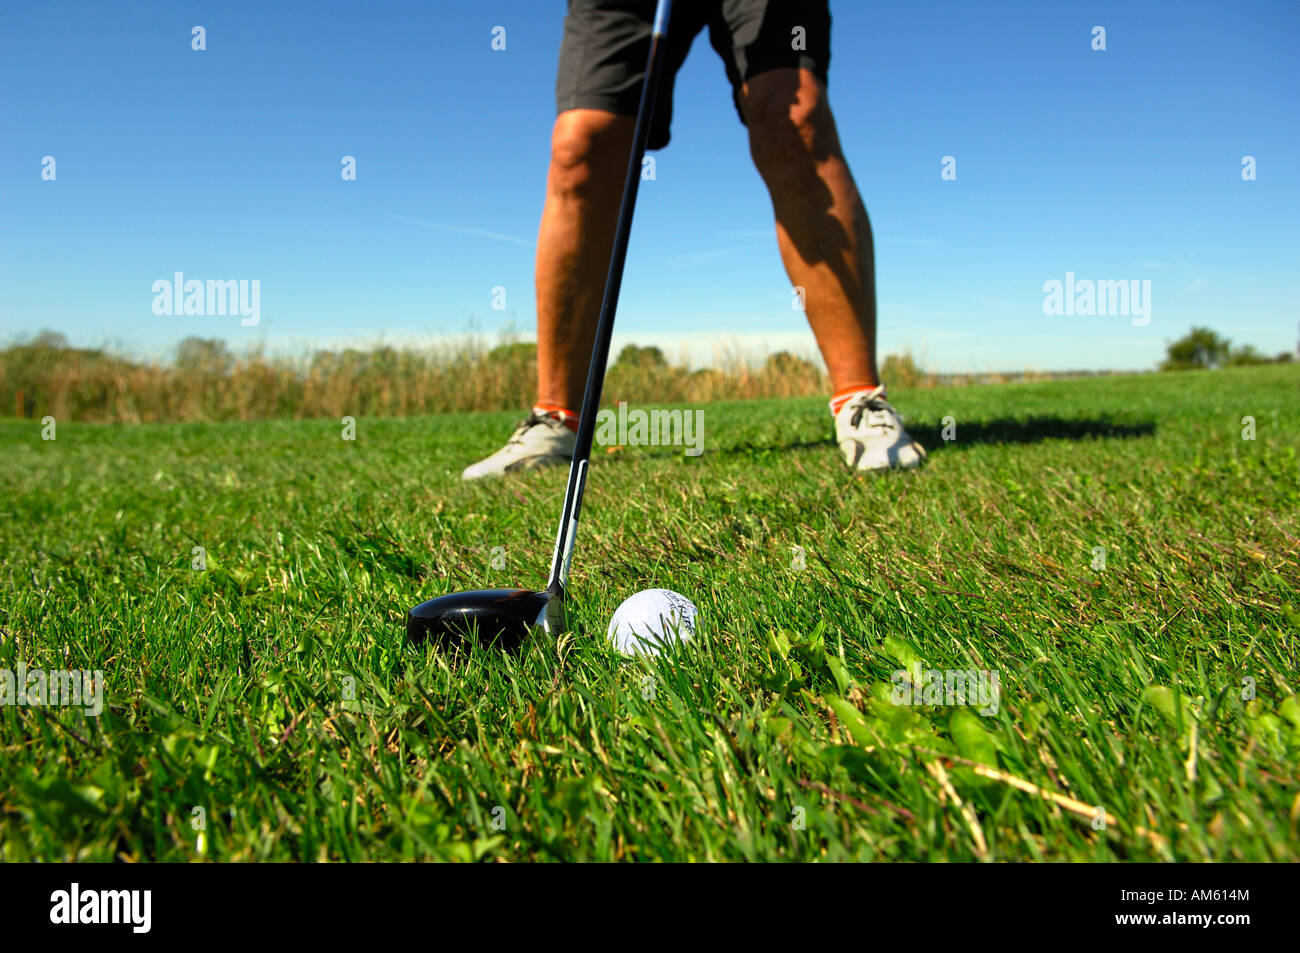 Golferduring a hit at the fairway, golf course, Caorle, Veneto, Italy Stock Photo